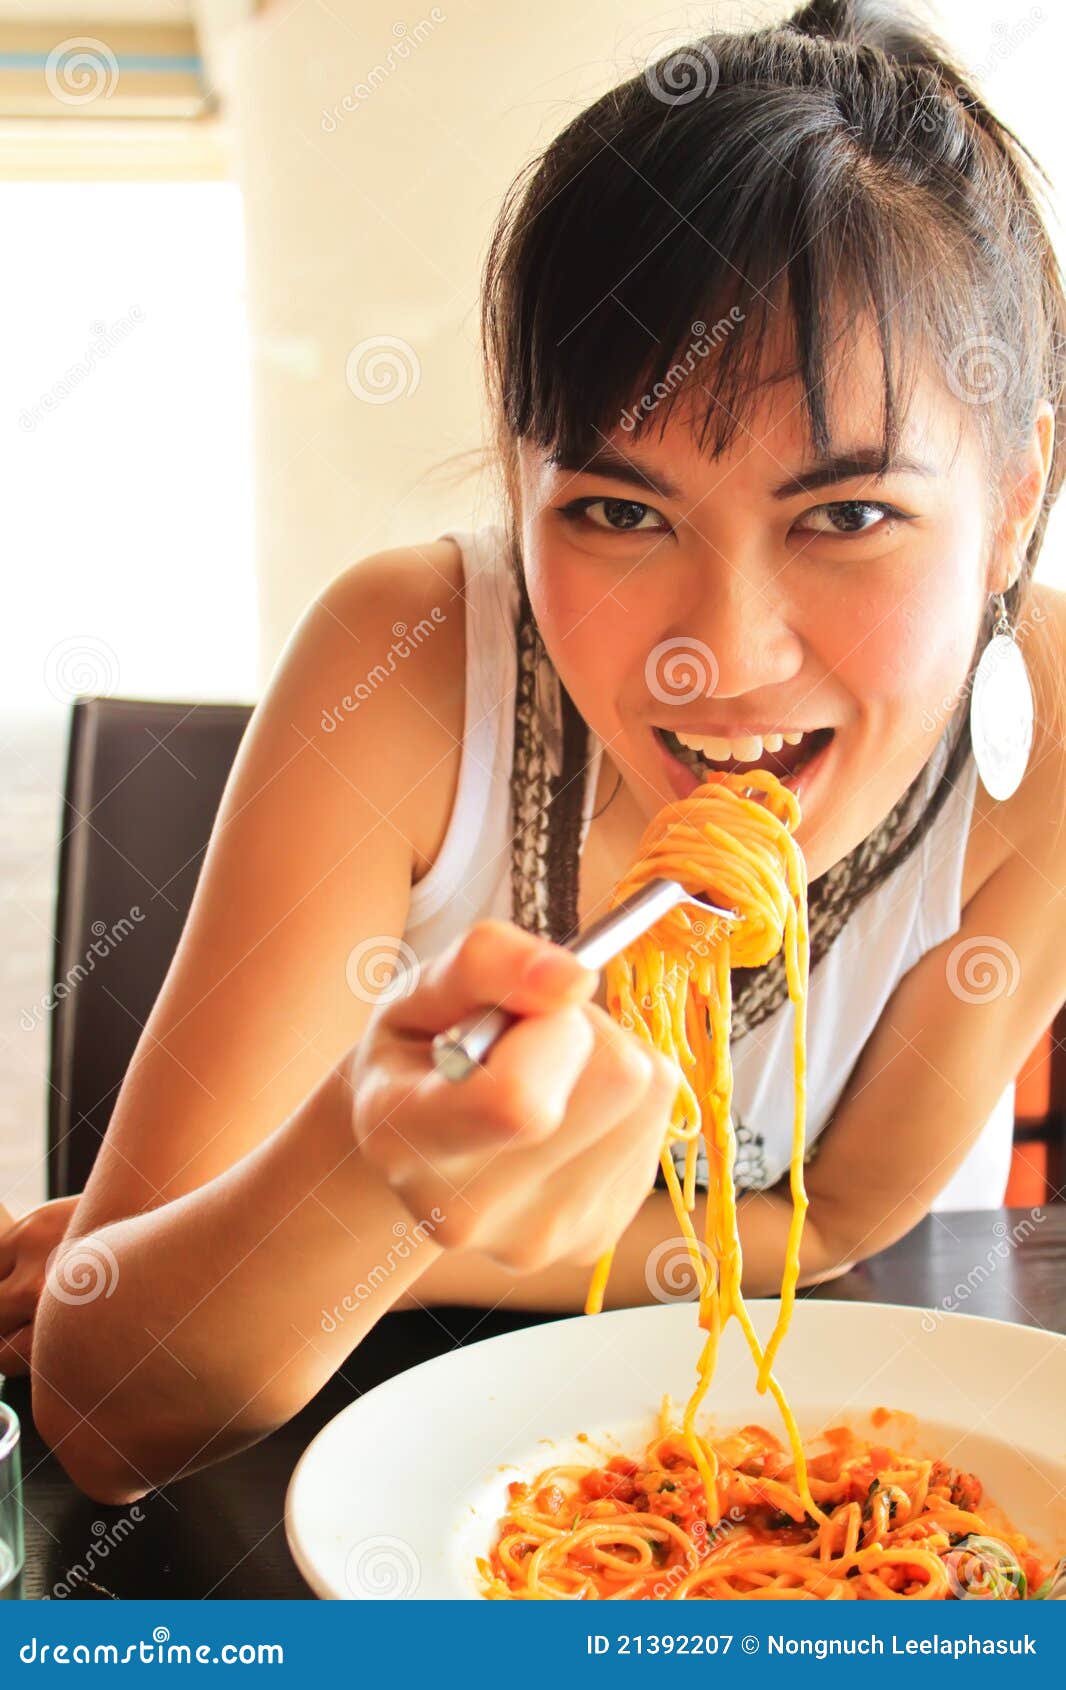 asian-woman-eating-spaghetti-21392207.jpg